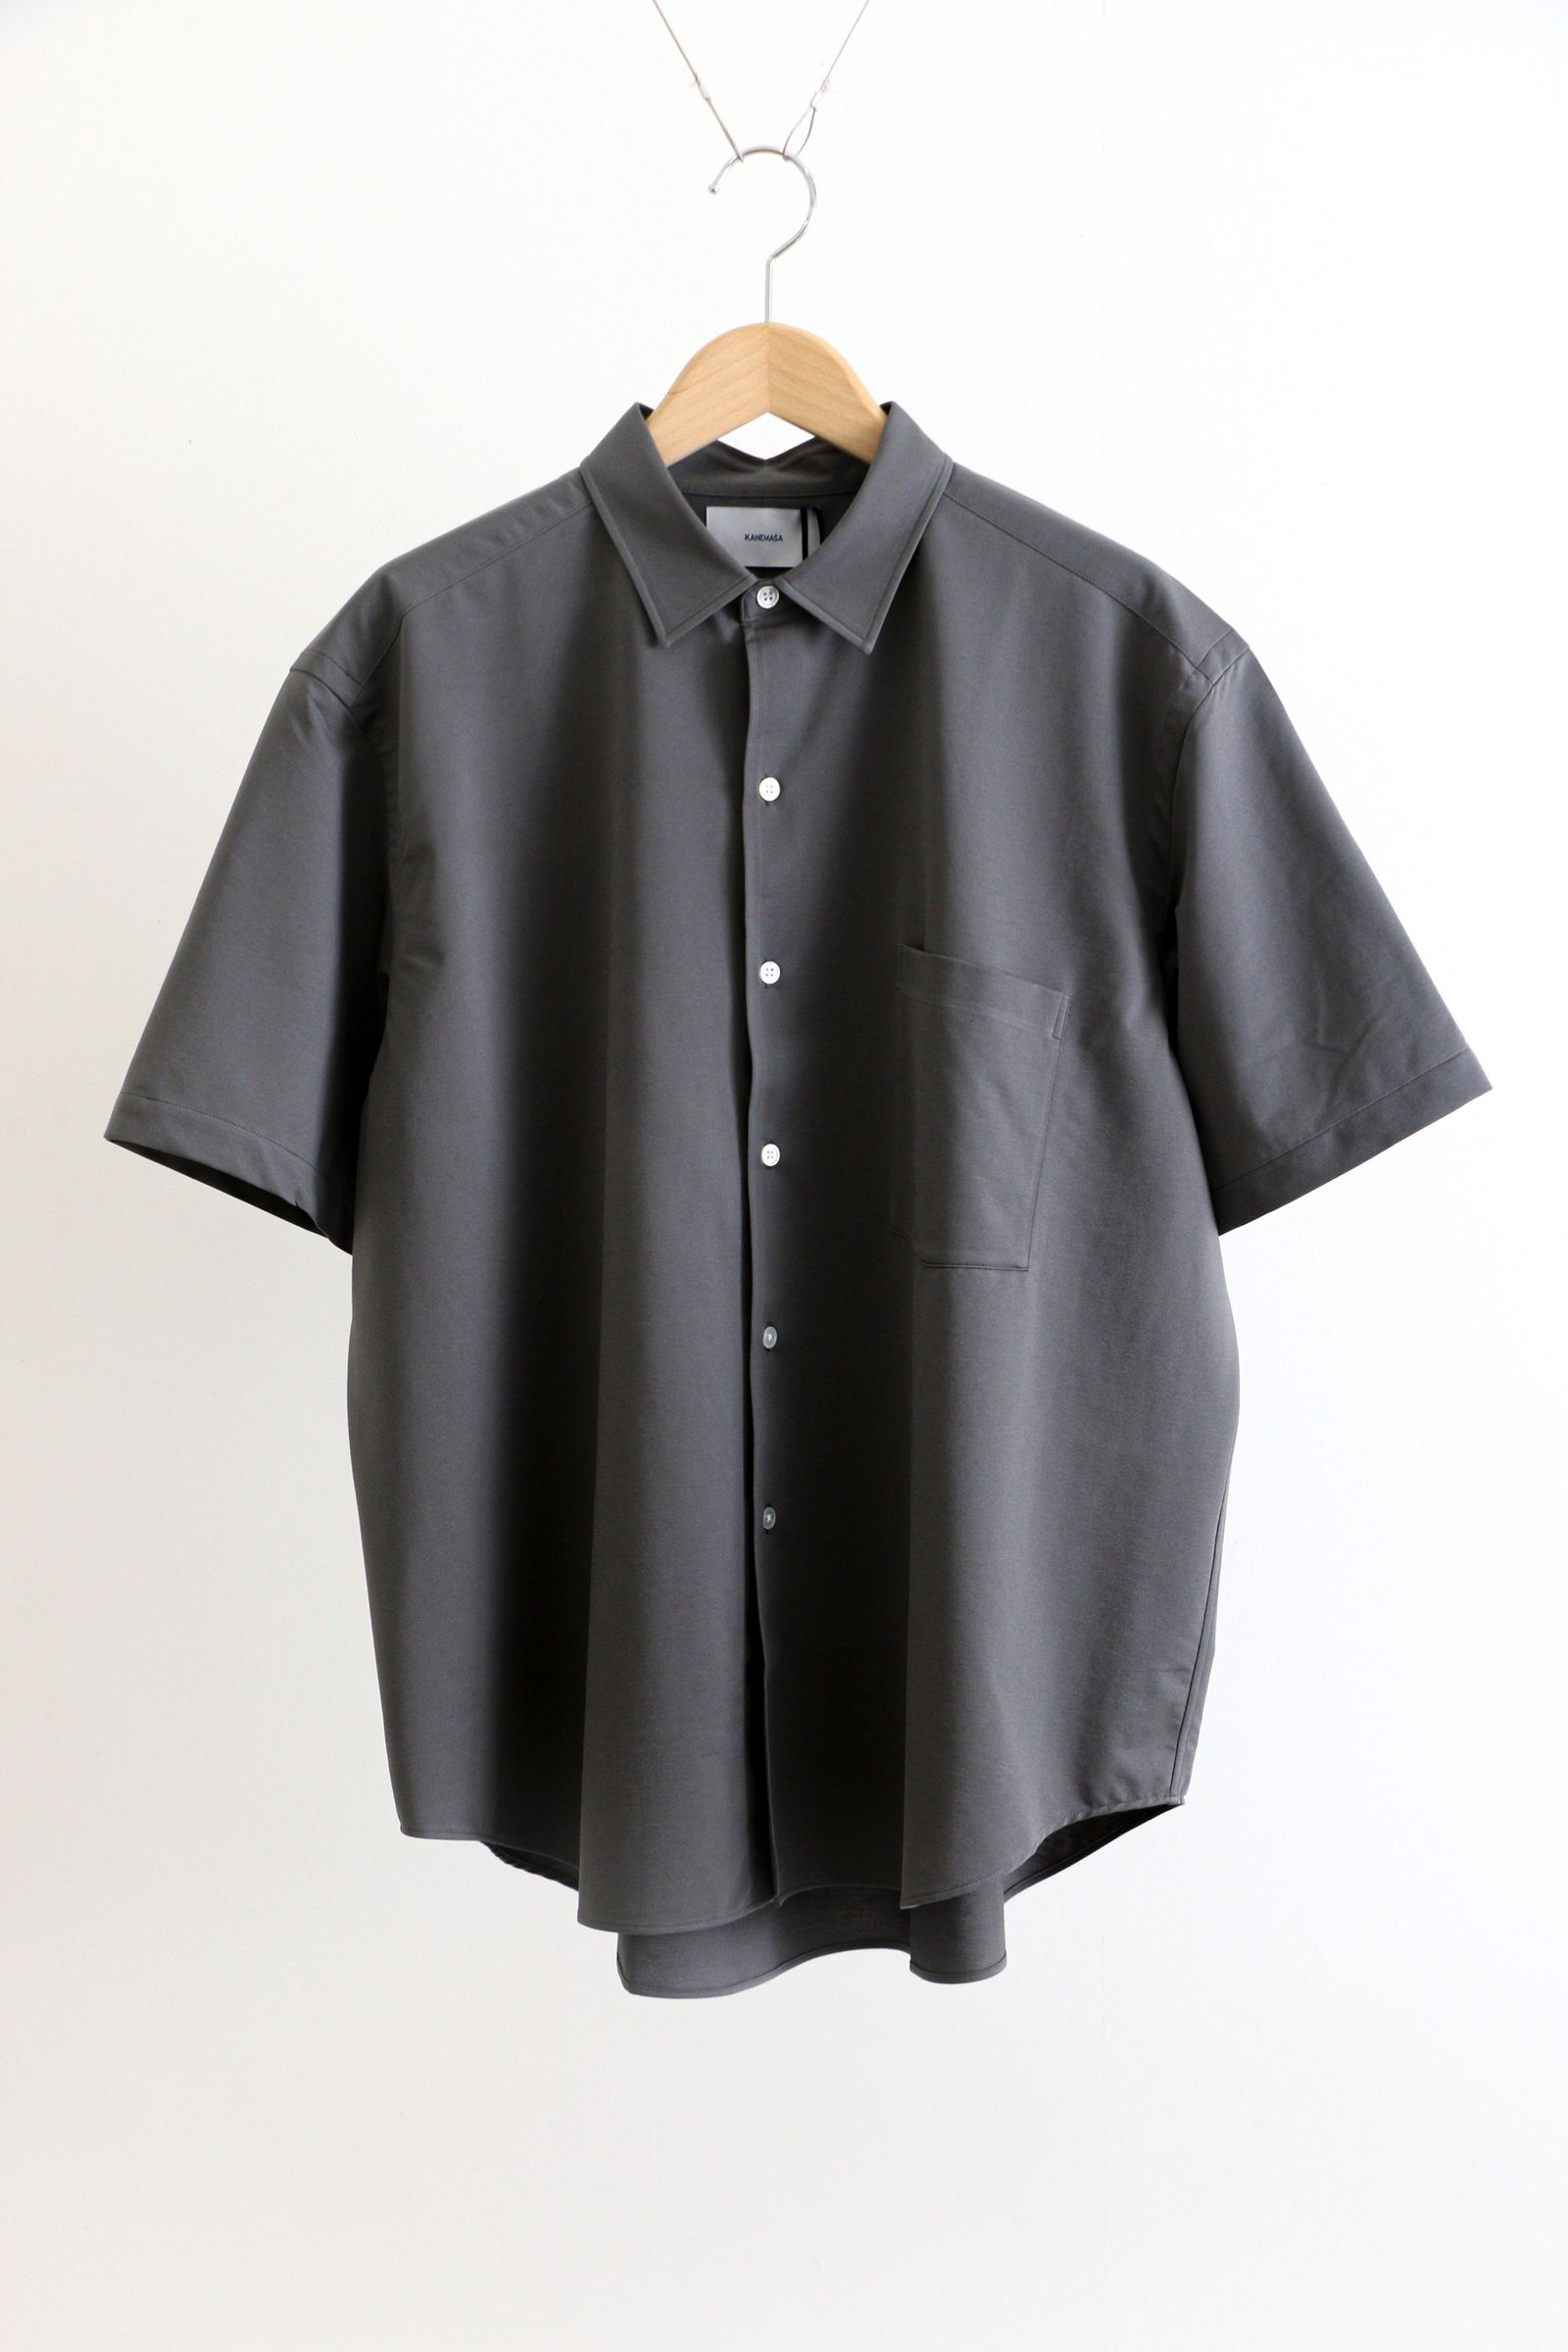 KANEMASA PHIL. - Royal Ox Dress Jersey Short Sleeve Shirt GRAY ...